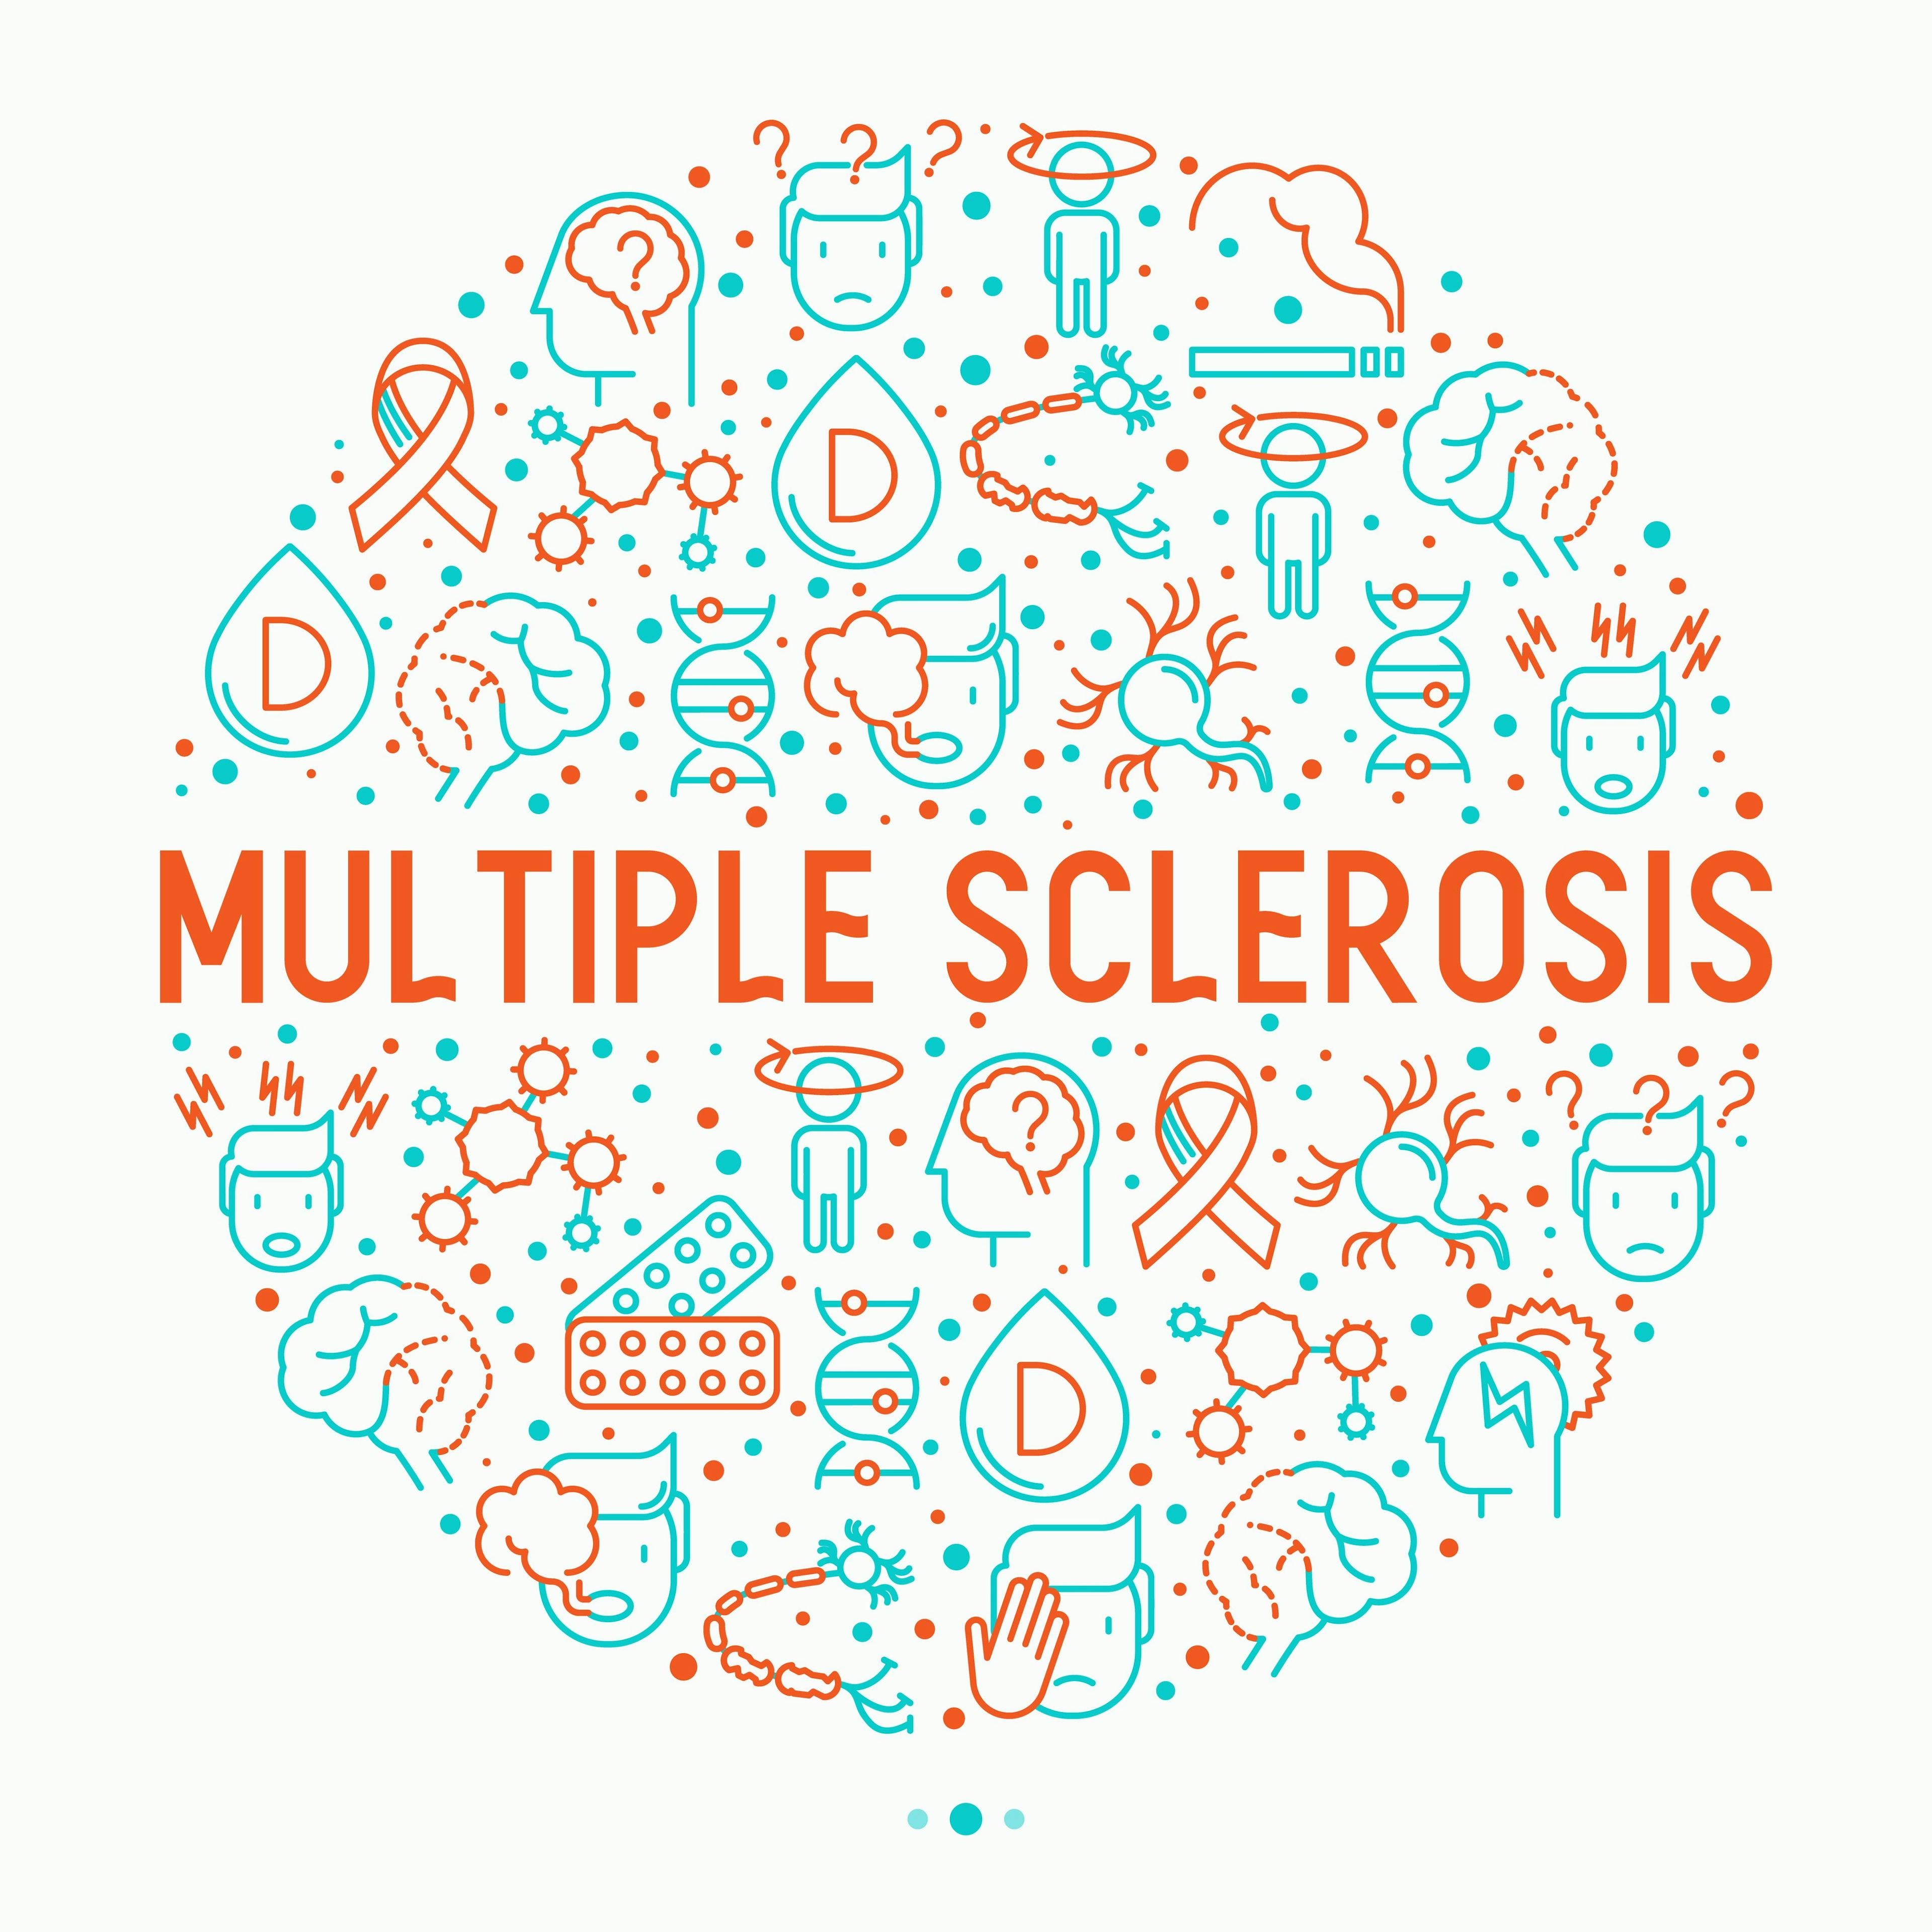 Multiple Sclerosis Concept Map | image credit: AlexBlogood - stock.adobe.com